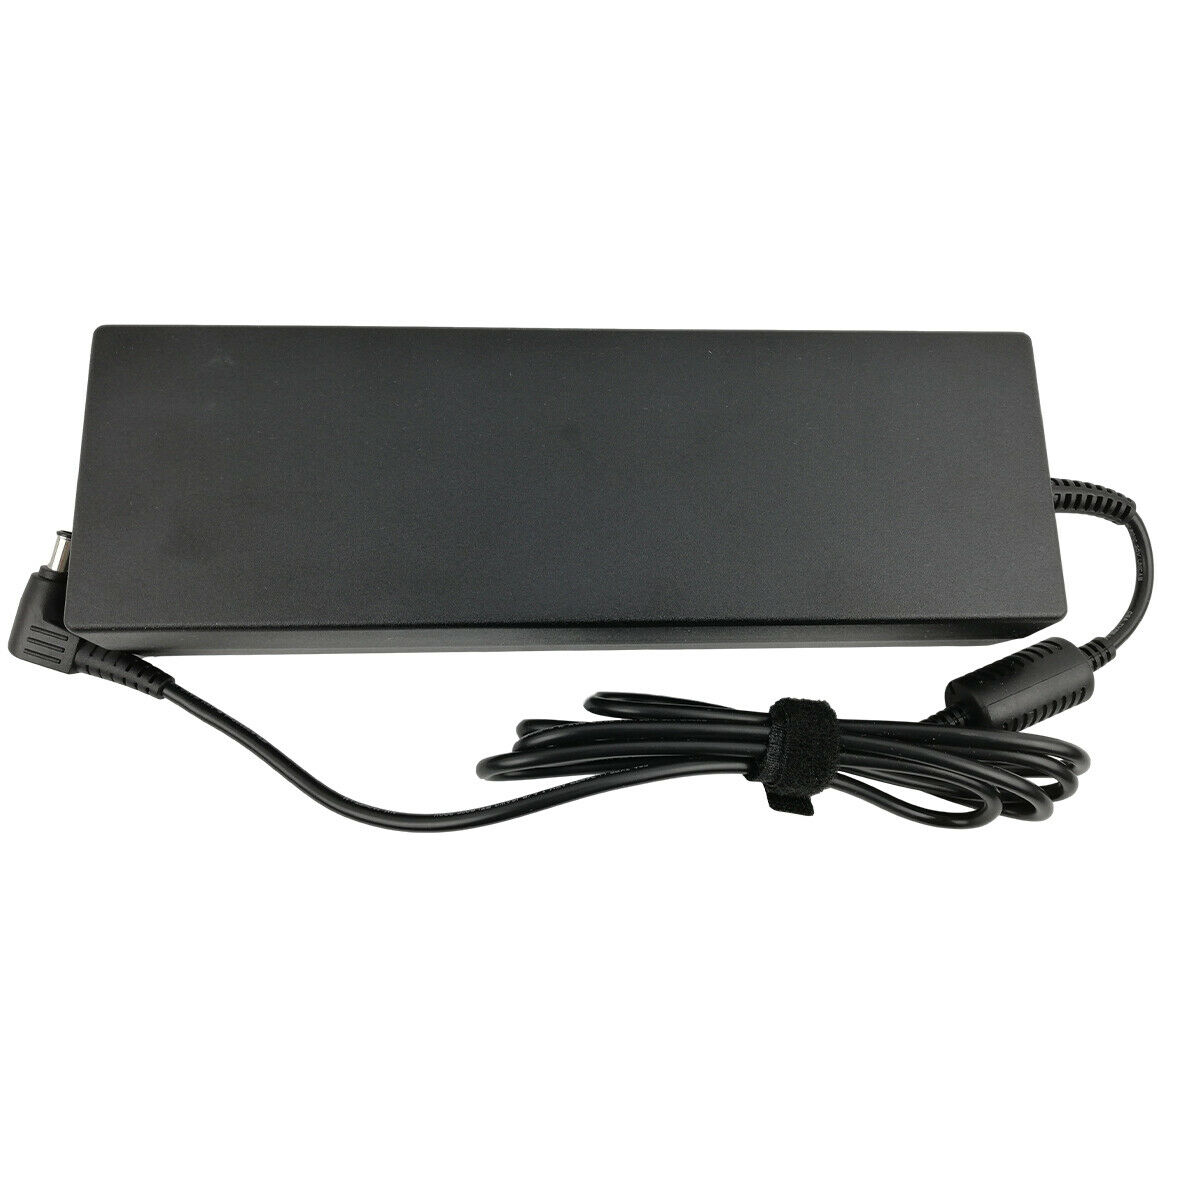 ACDP-200D02-KD-55X900E-NEW Original SONY KD-55X900E TV Power Adapter Cable Cord Bo